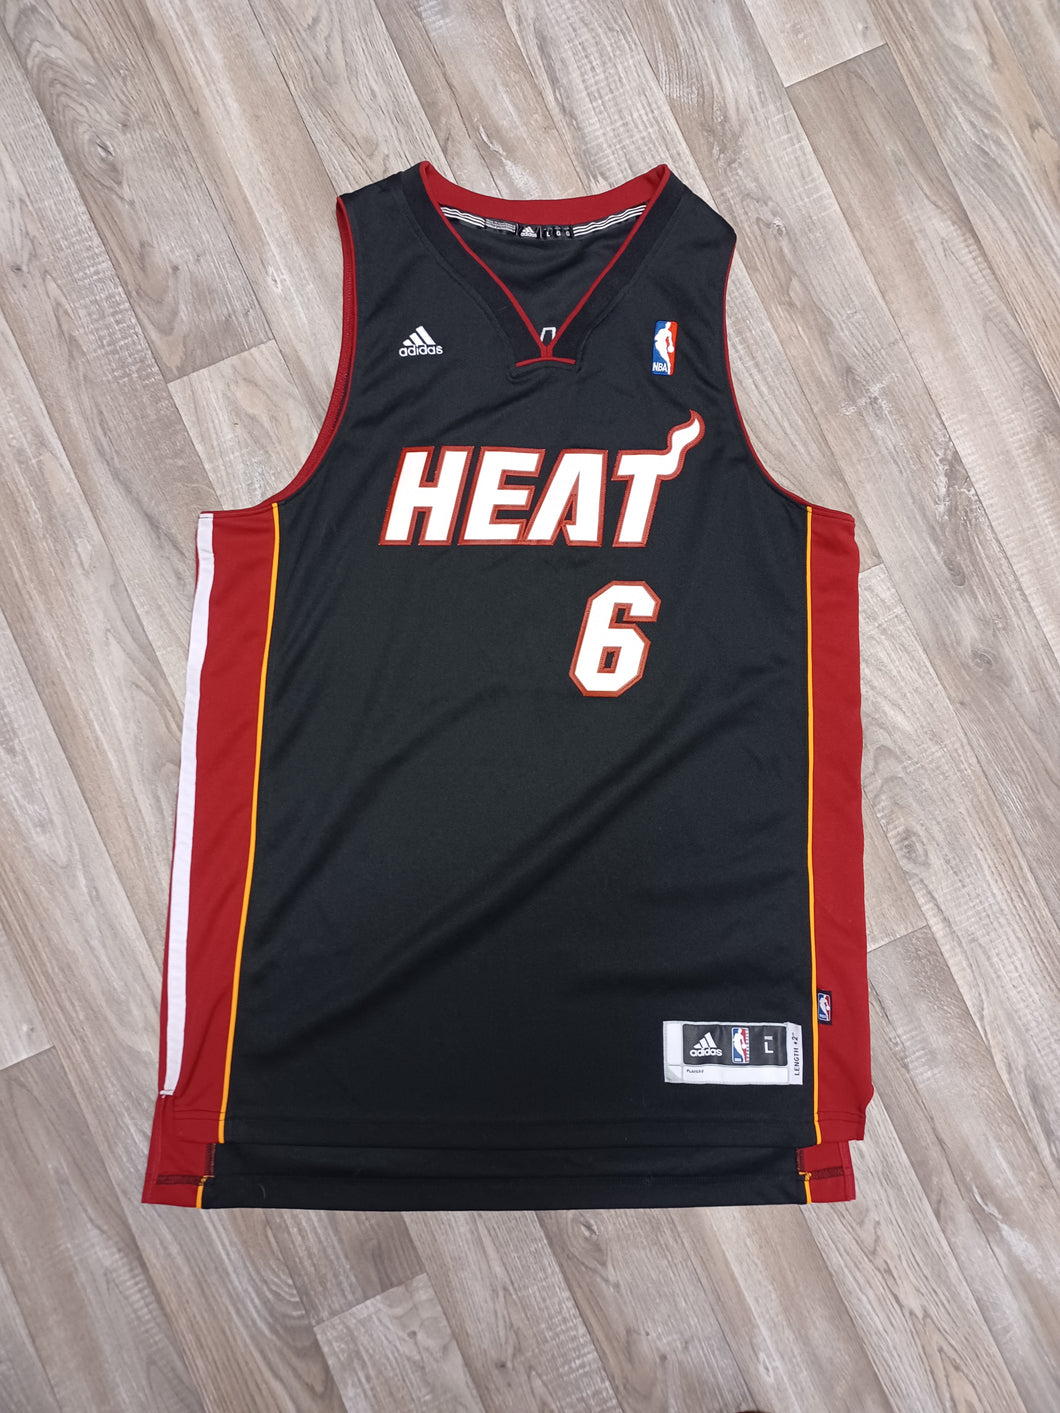 Miami Heat - Rare Basketball Jerseys